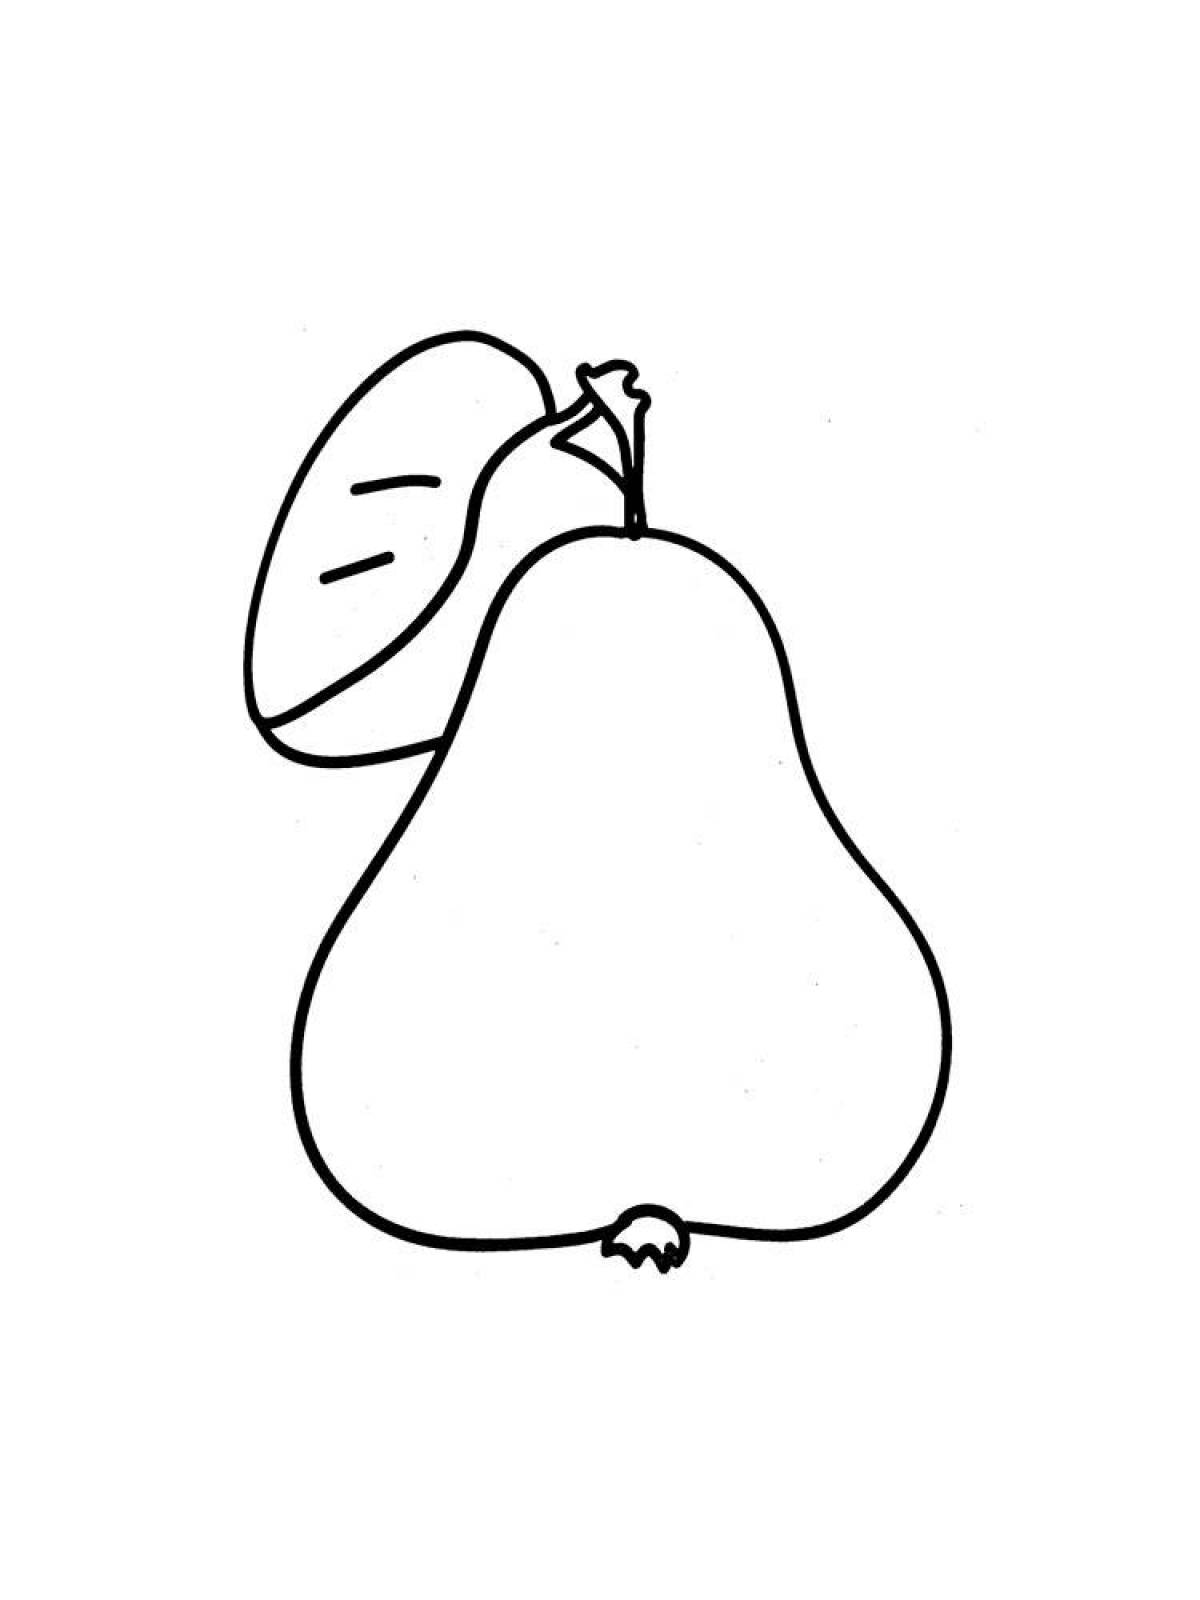 Coloring pear for preschoolers